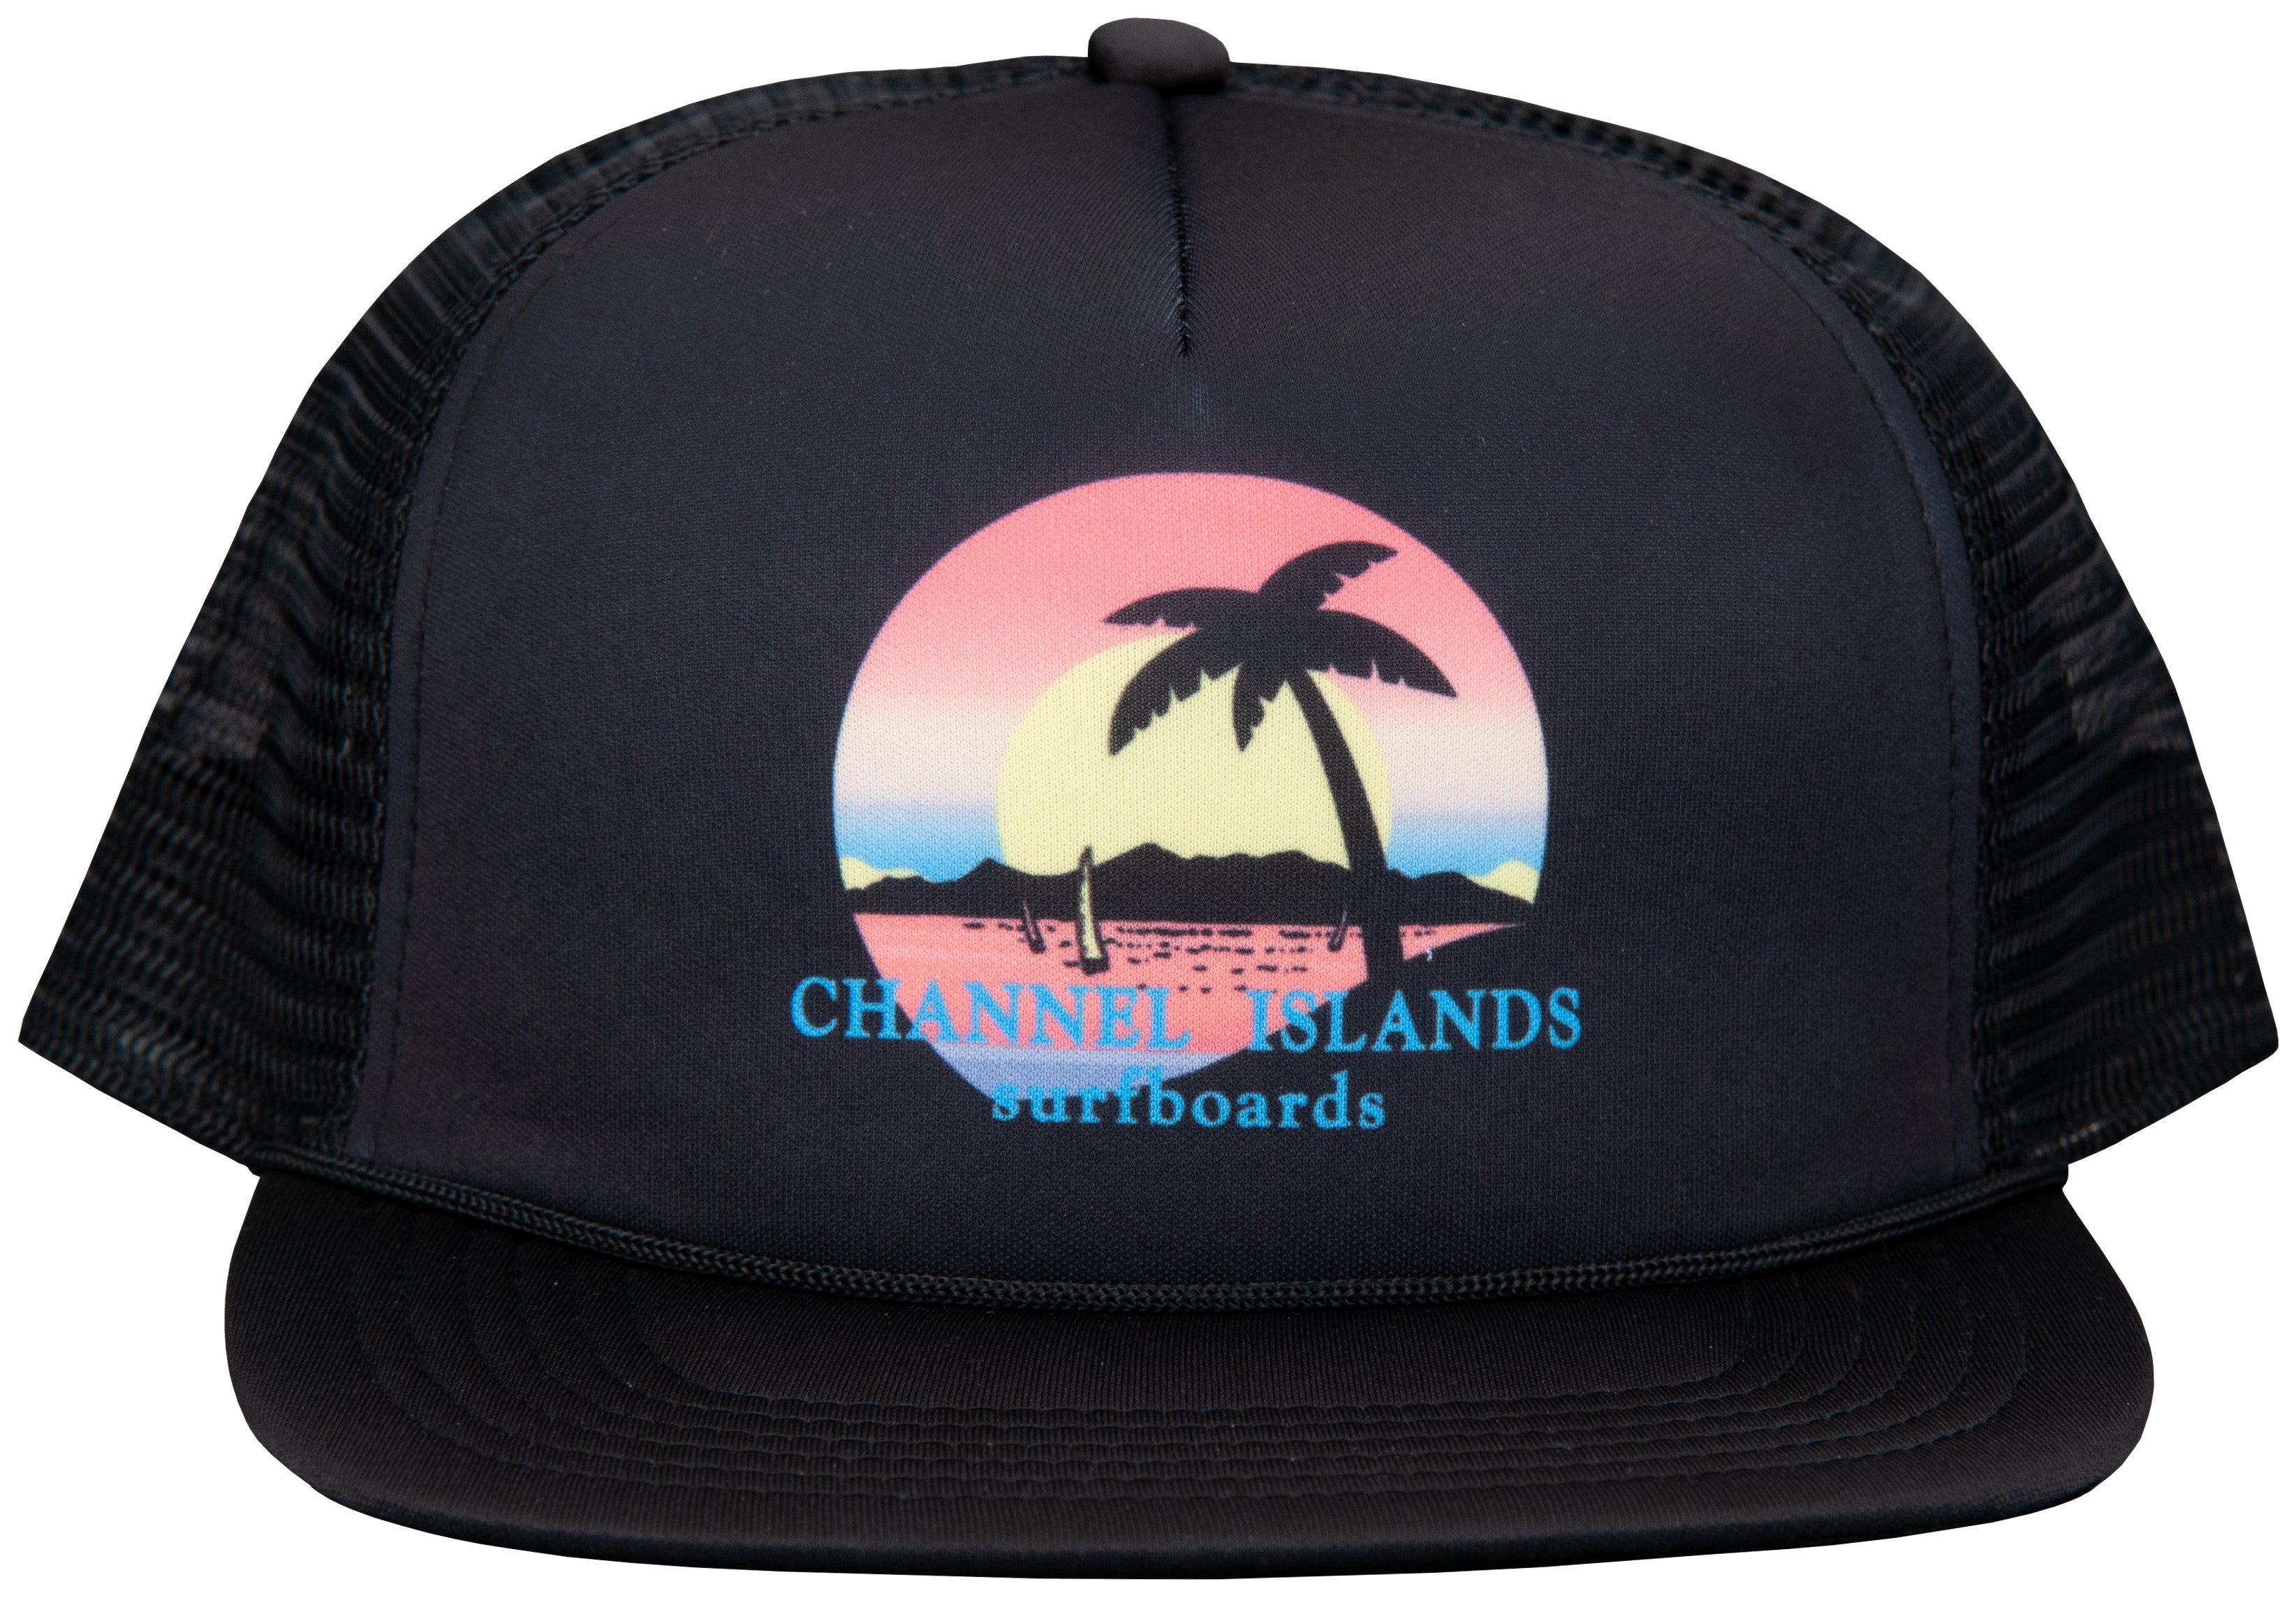 Channel Islands Surfboards Island Shadows Trucker Hat